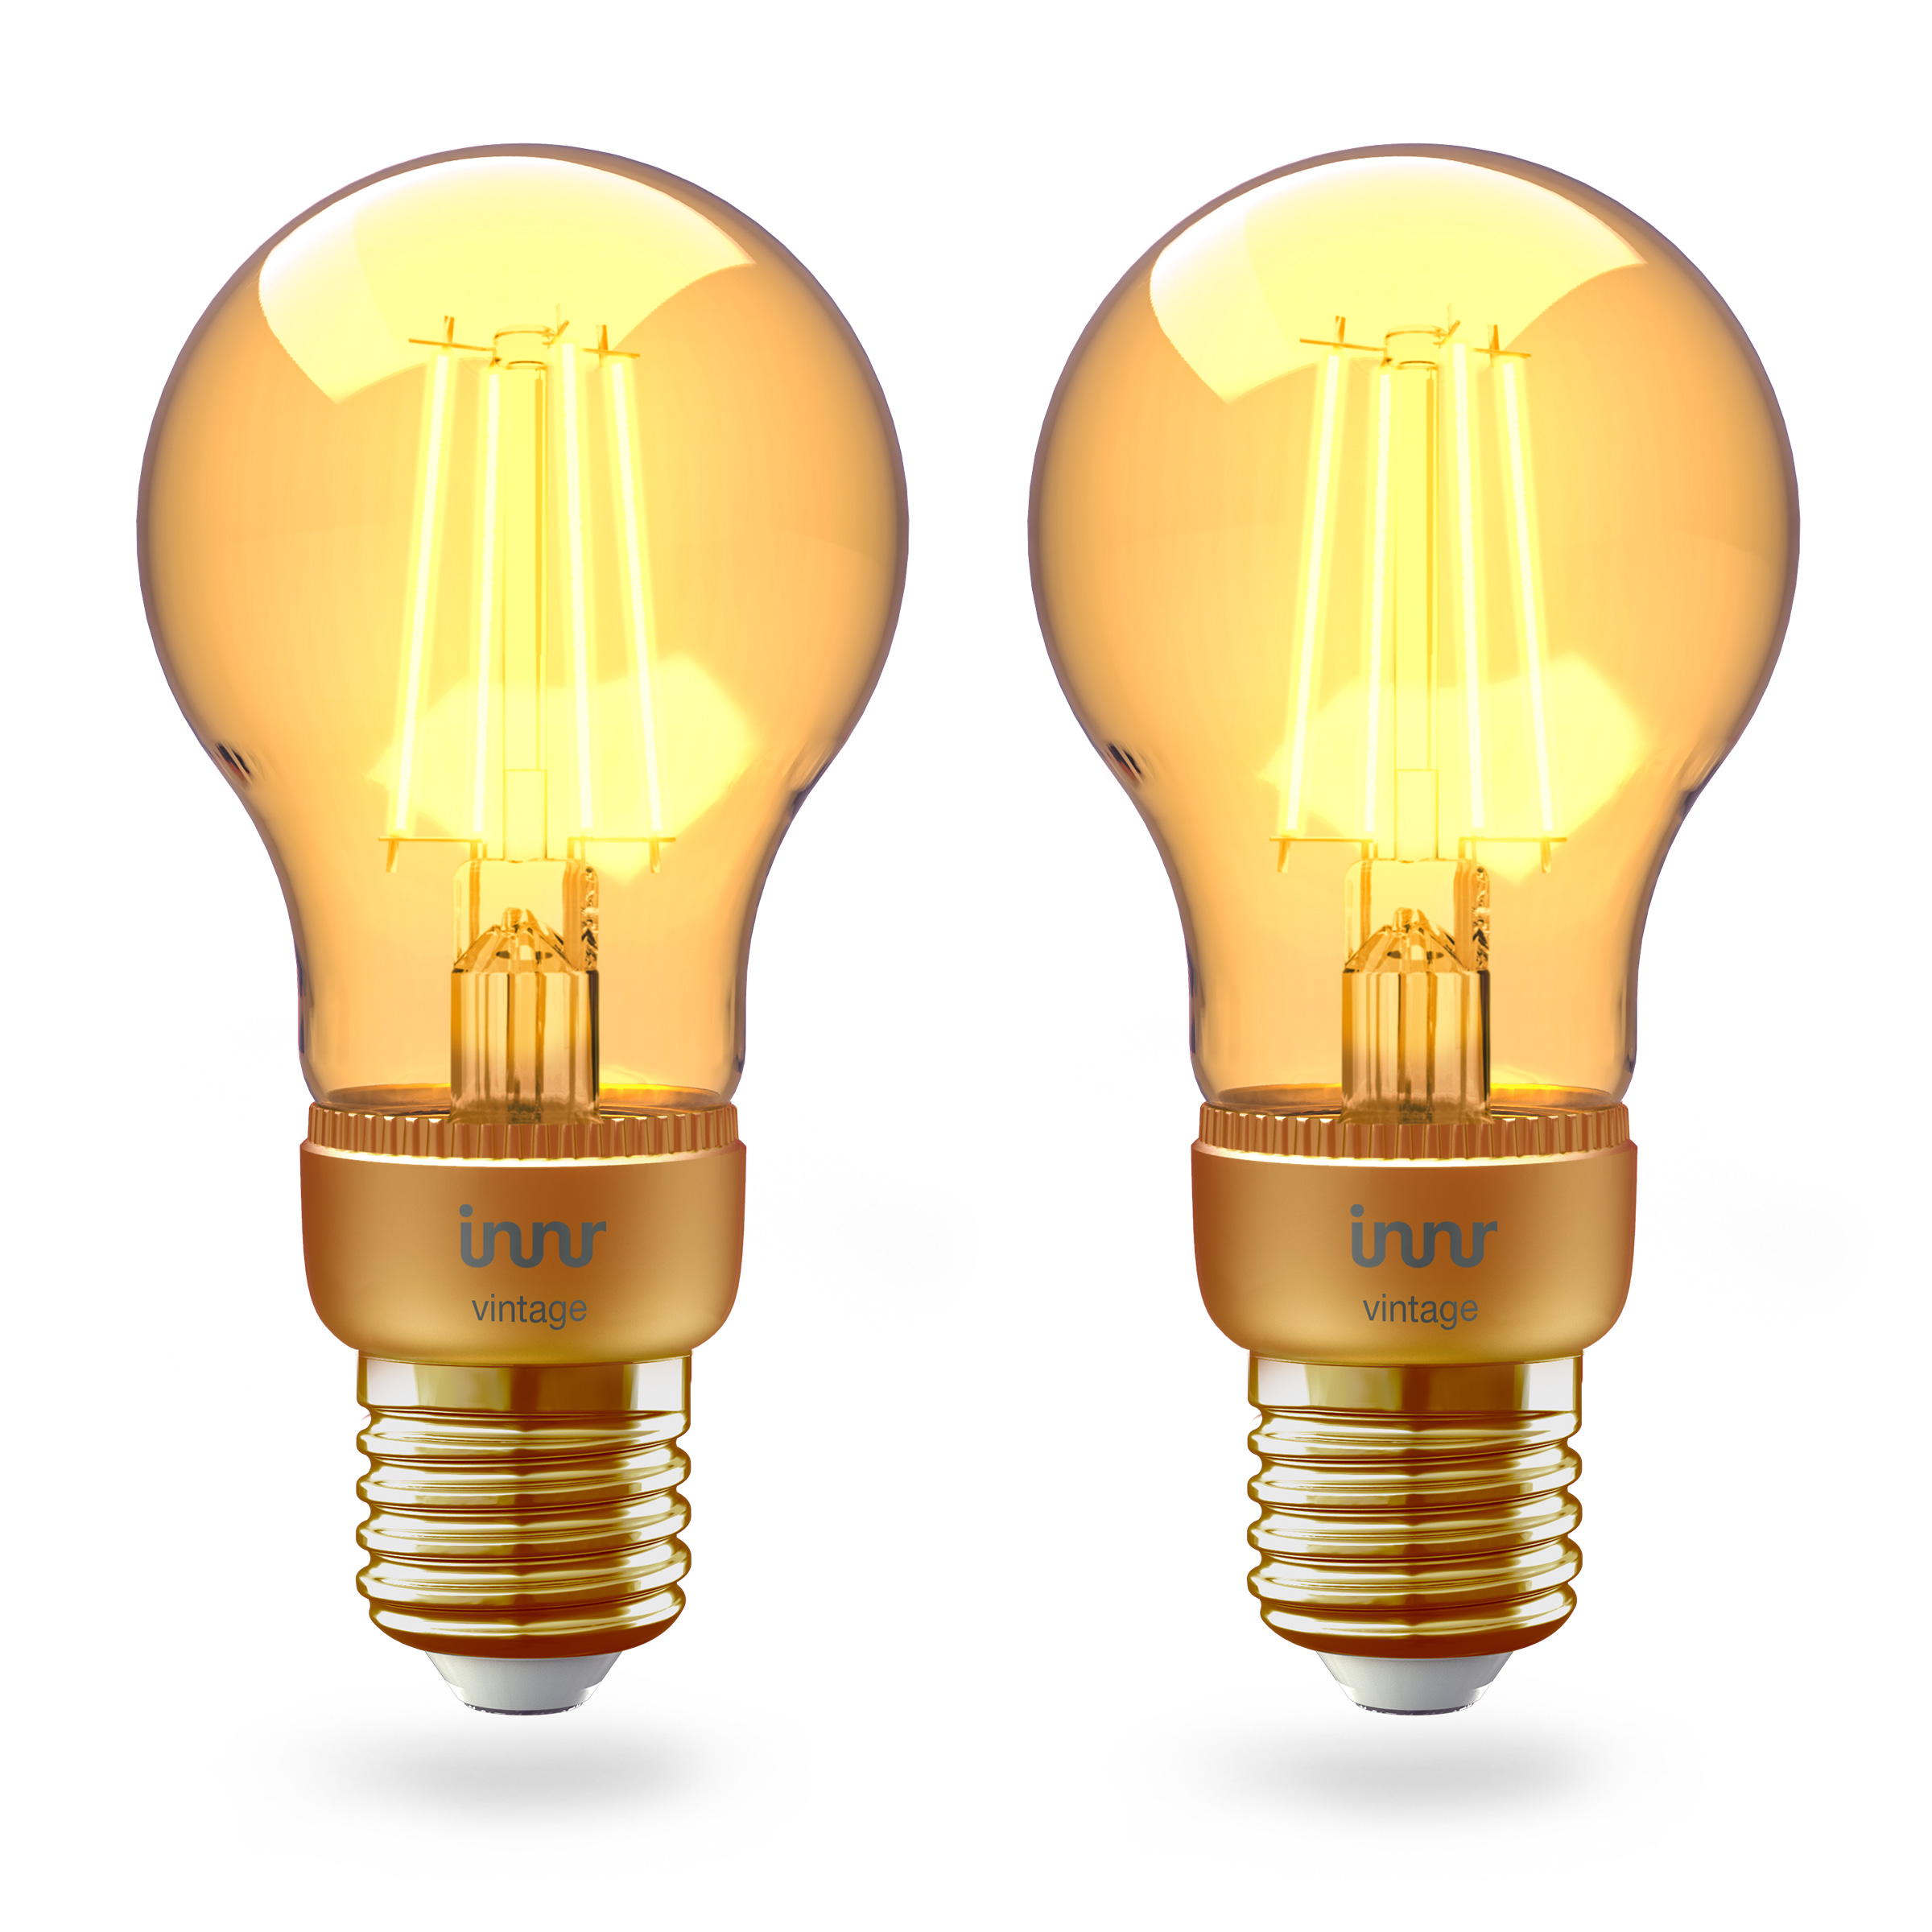 Lampe Zigbee Kompatibel Hue Philips LED, Filament 2200K 263-2 LED Smart 2-pack & Bulb, INNR mit Vintage RF Alexa,